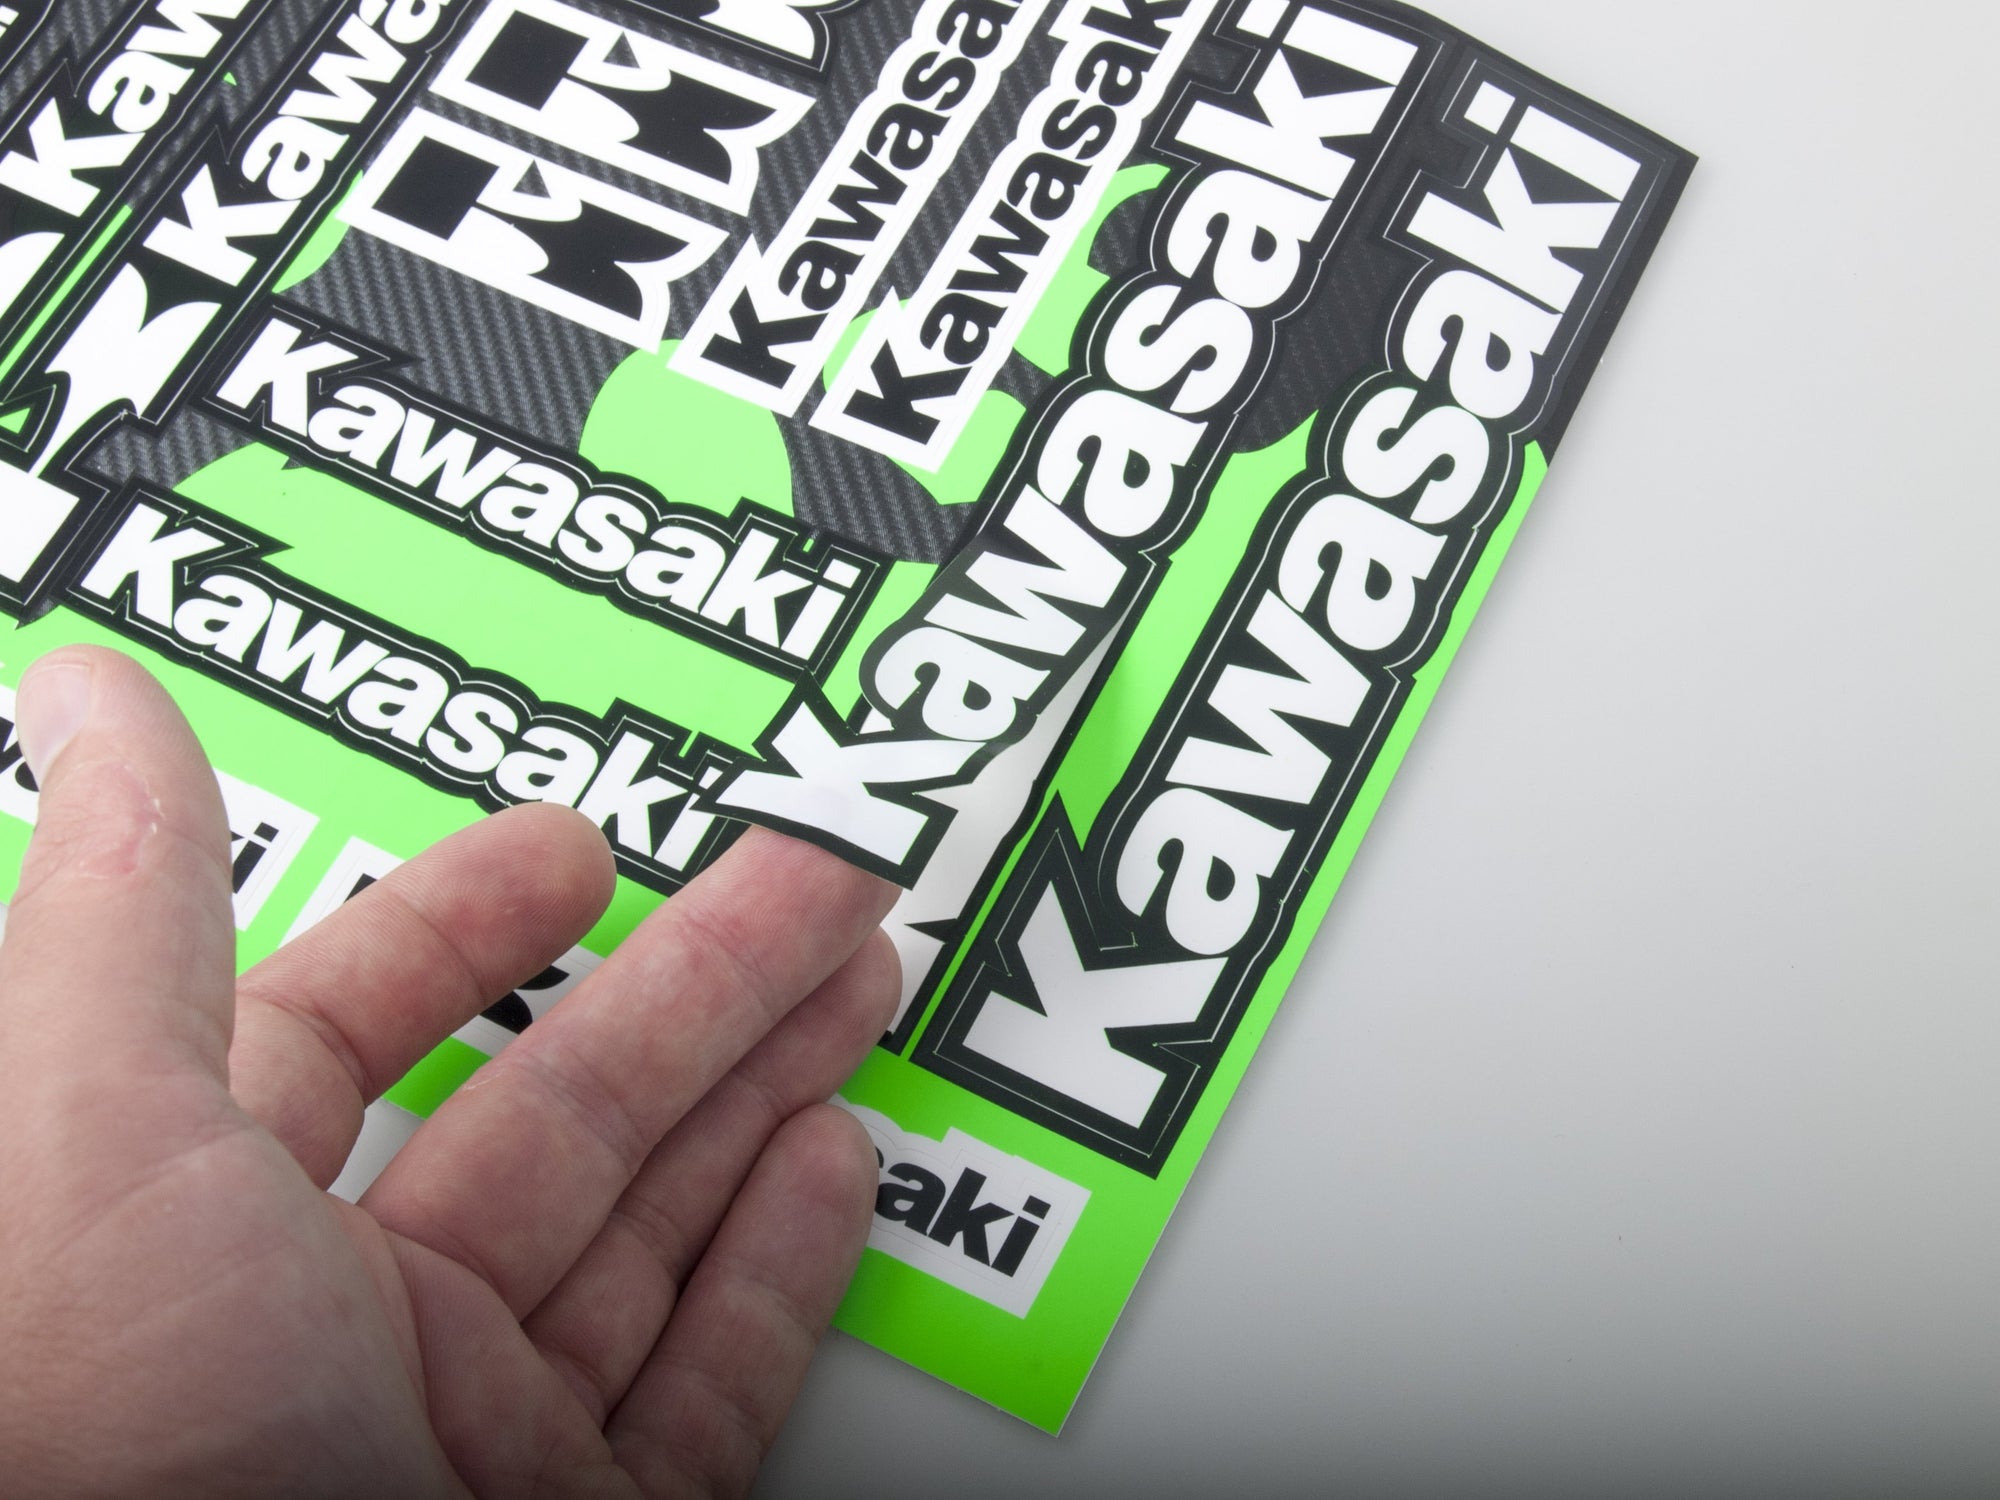 Kawasaki aufkleber für motoren - life-decor.de